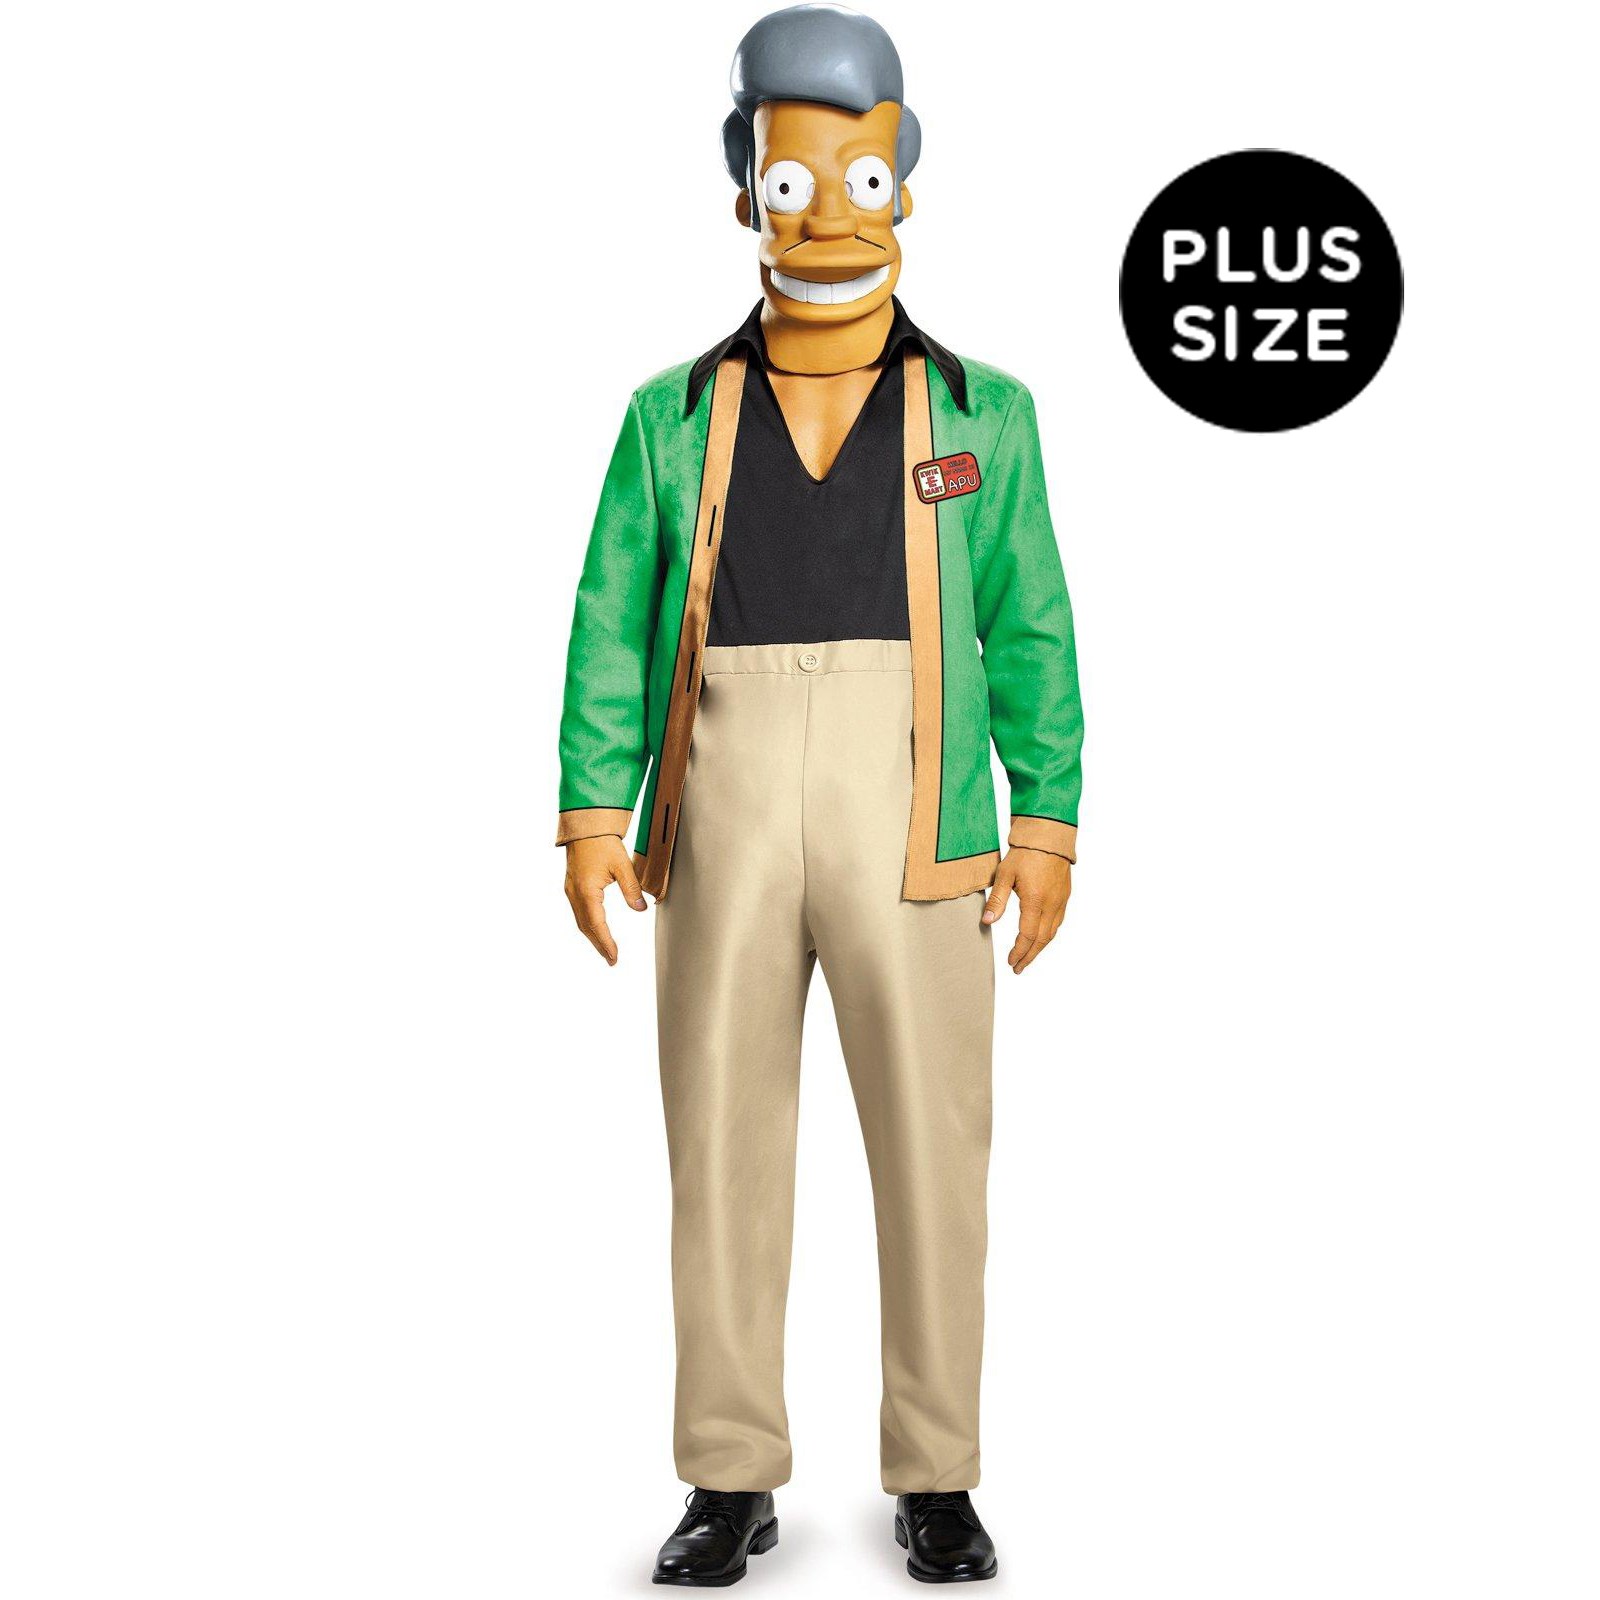 The Simpsons: Plus Deluxe Adult Apu Kwik E Mart Costume